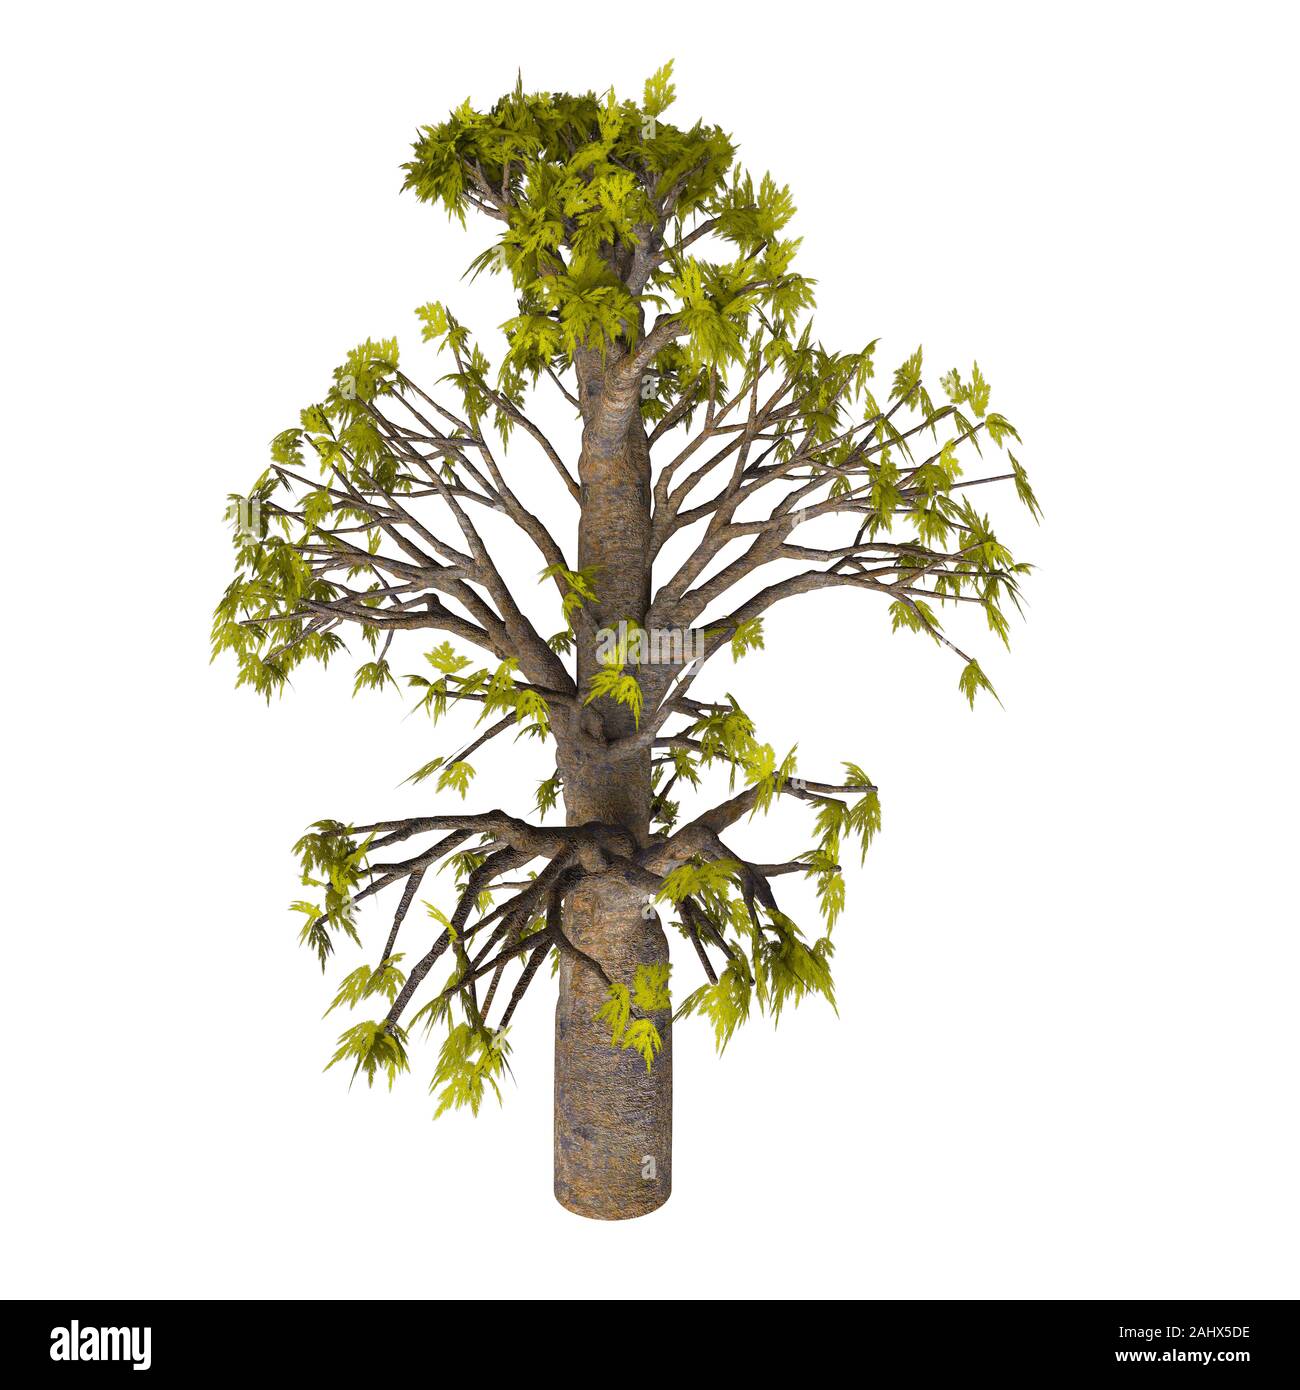 Bunya-Bunya Tree - Araucaria bidwillii is a coniferous evergreen pine tree that lives in New Zealand and Australia. Stock Photo